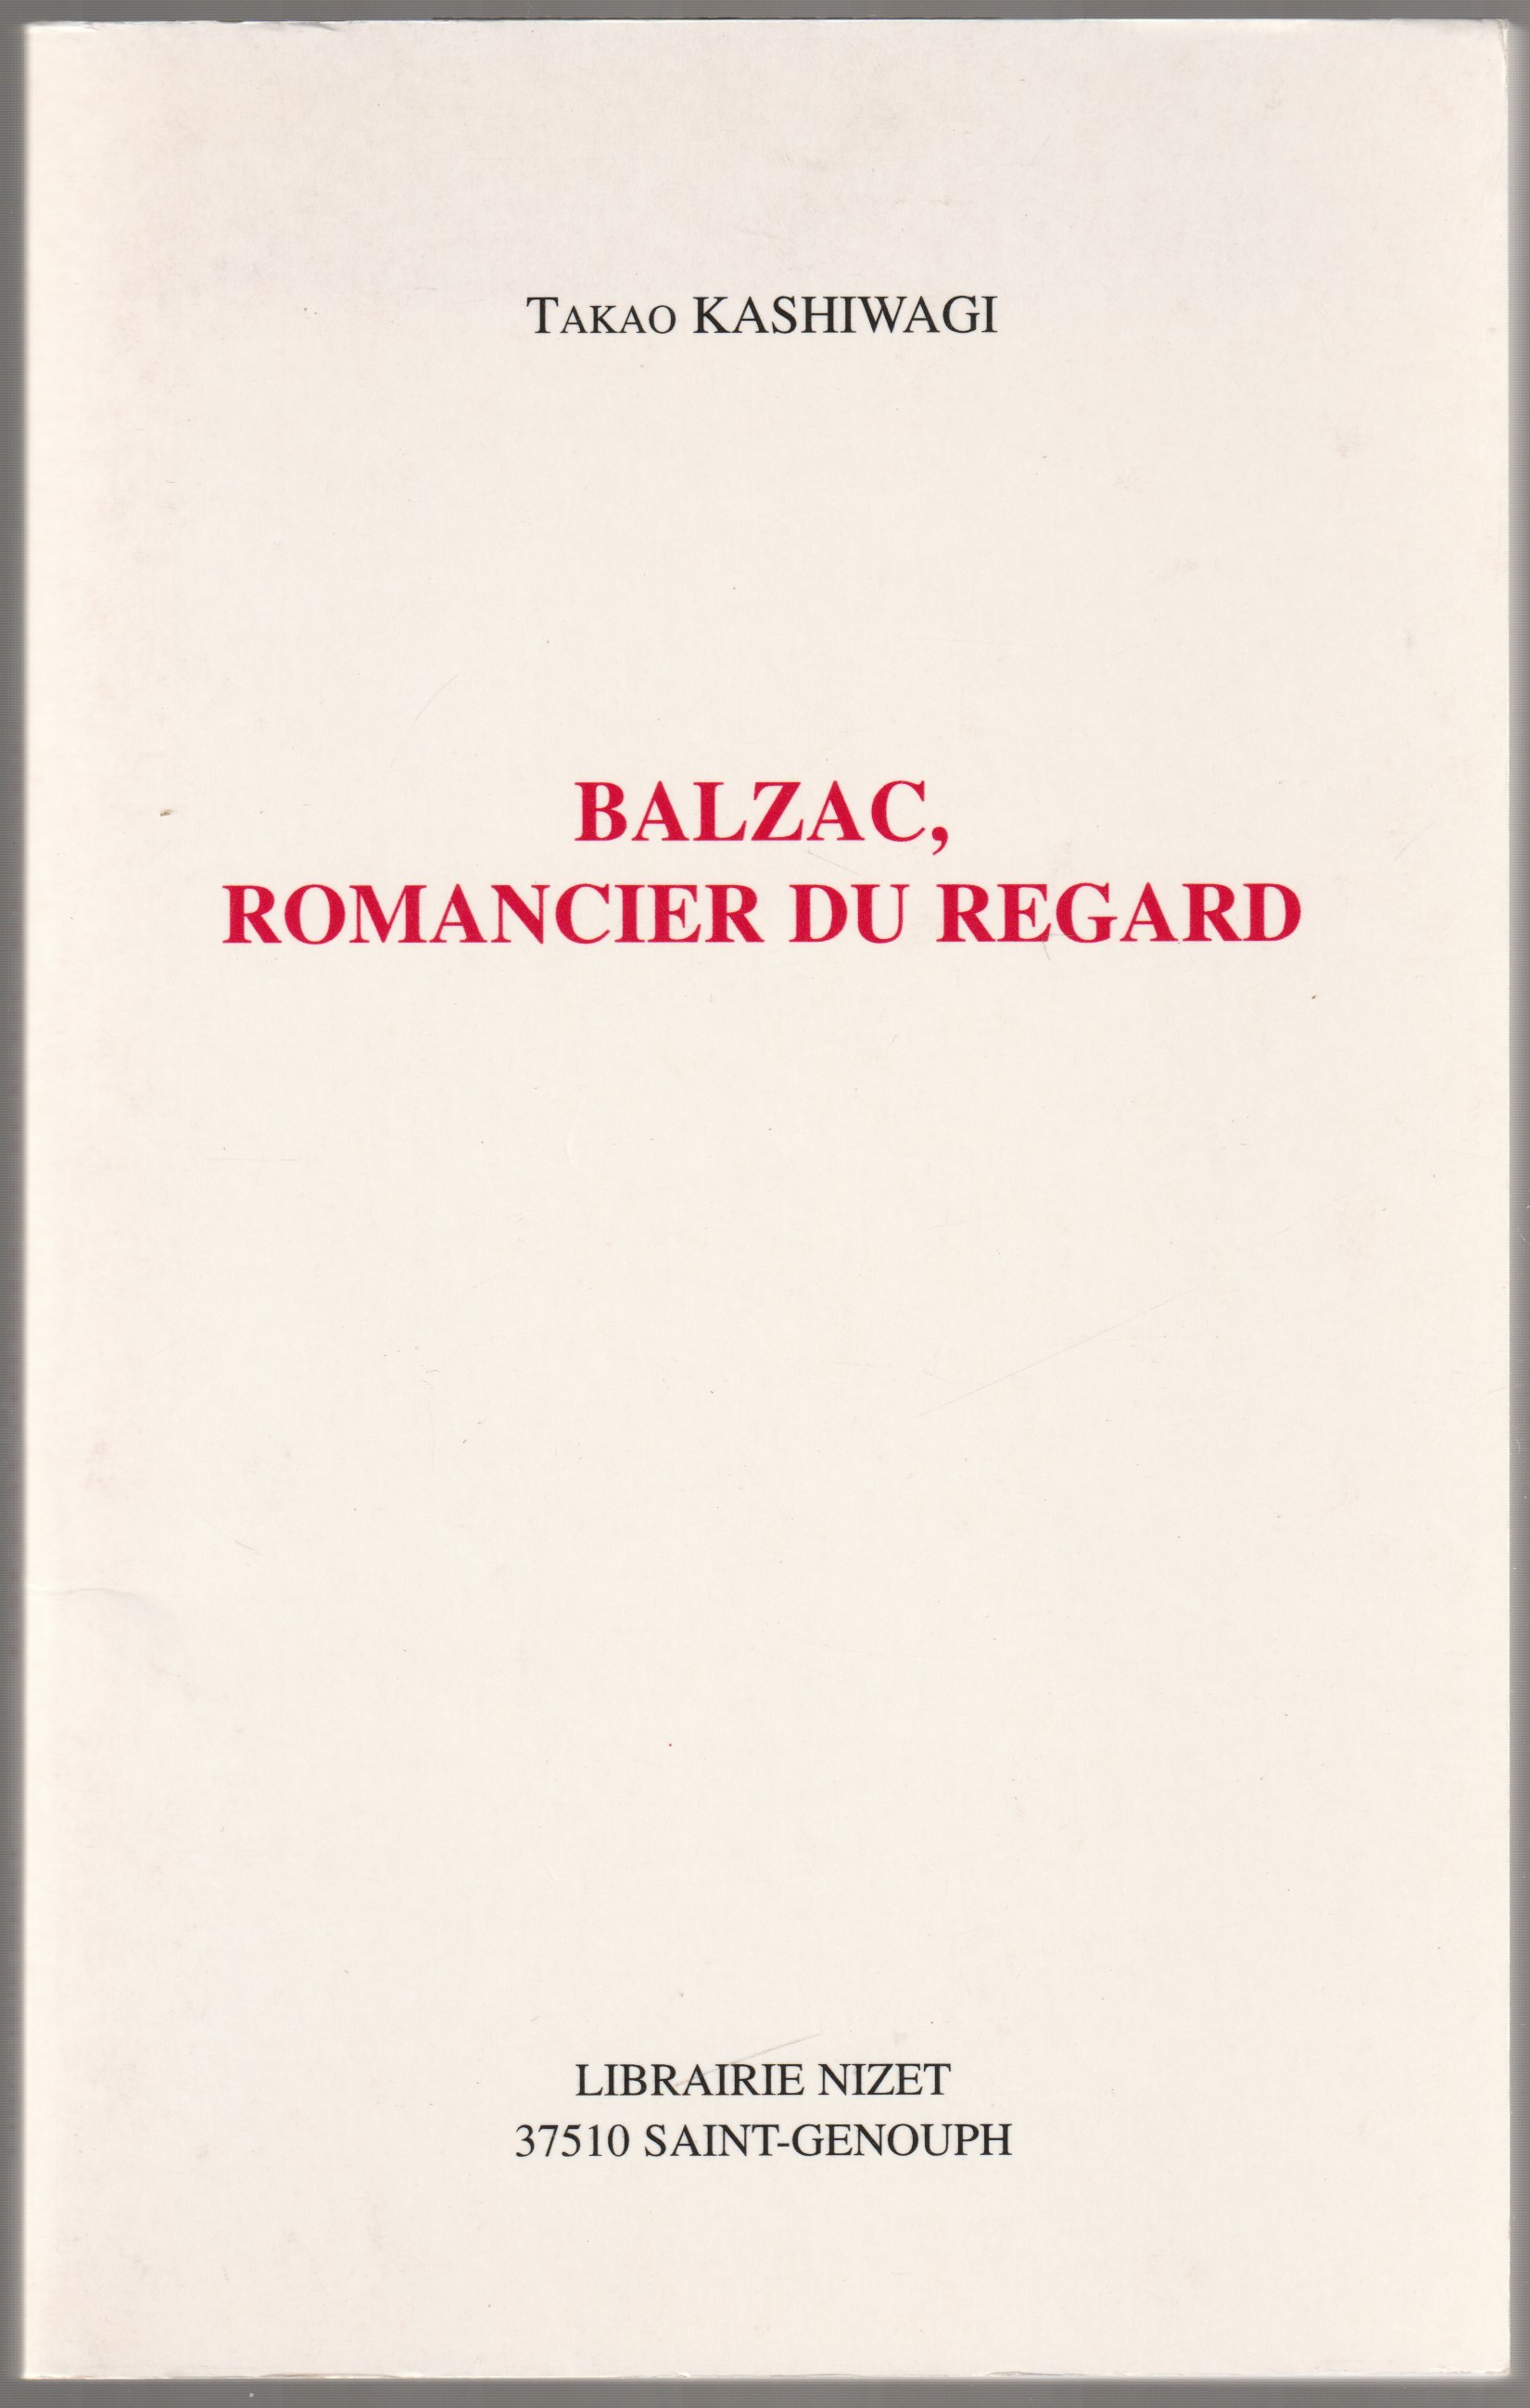 Balzac, romancier du regard.